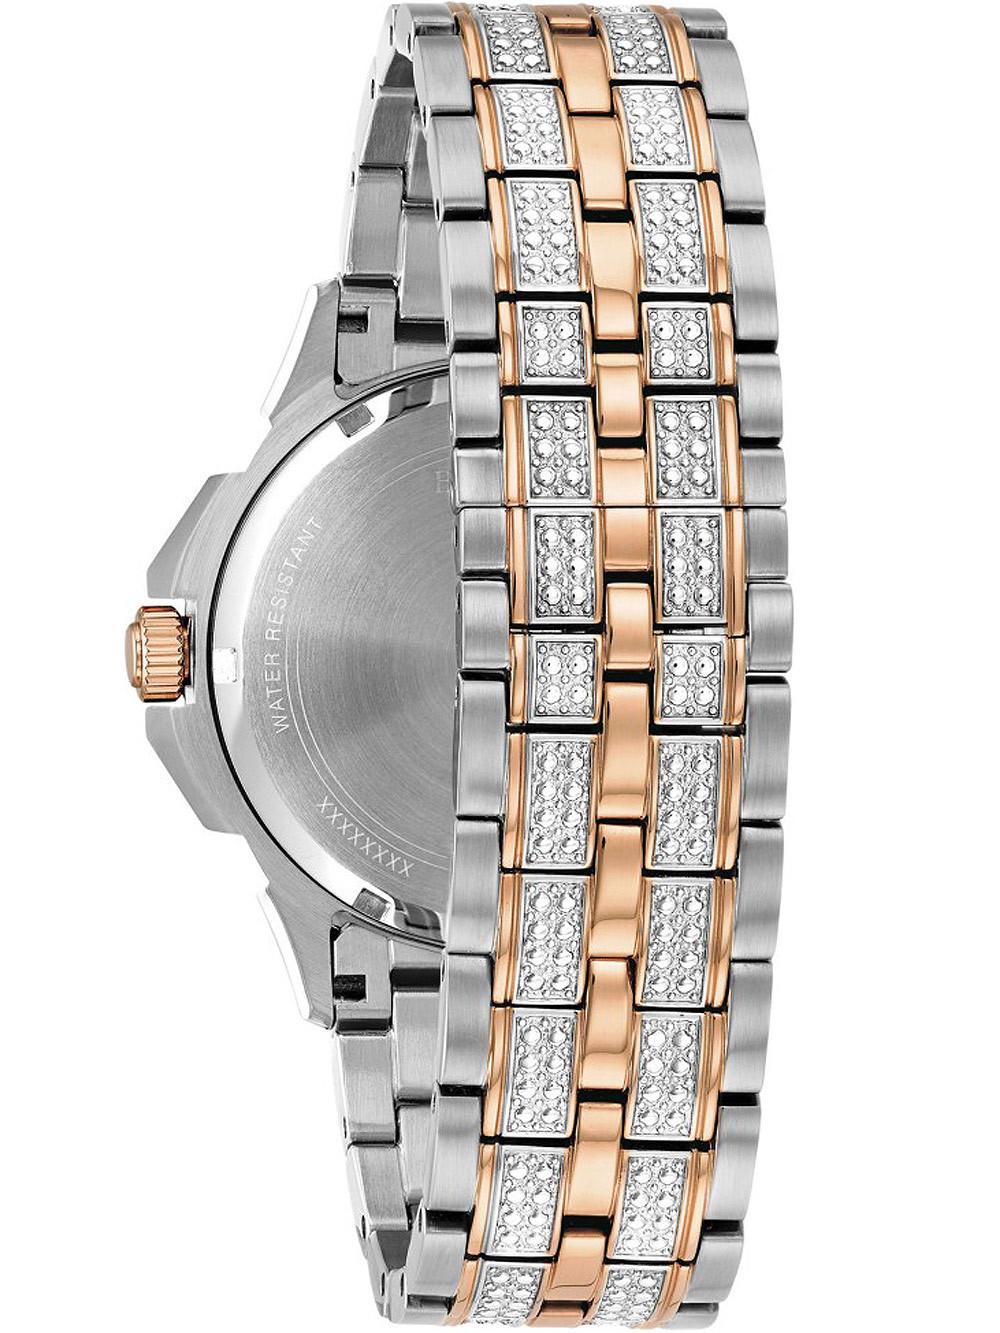 Zegarek męski Bulova Crystal Octava 98C133 srebrny